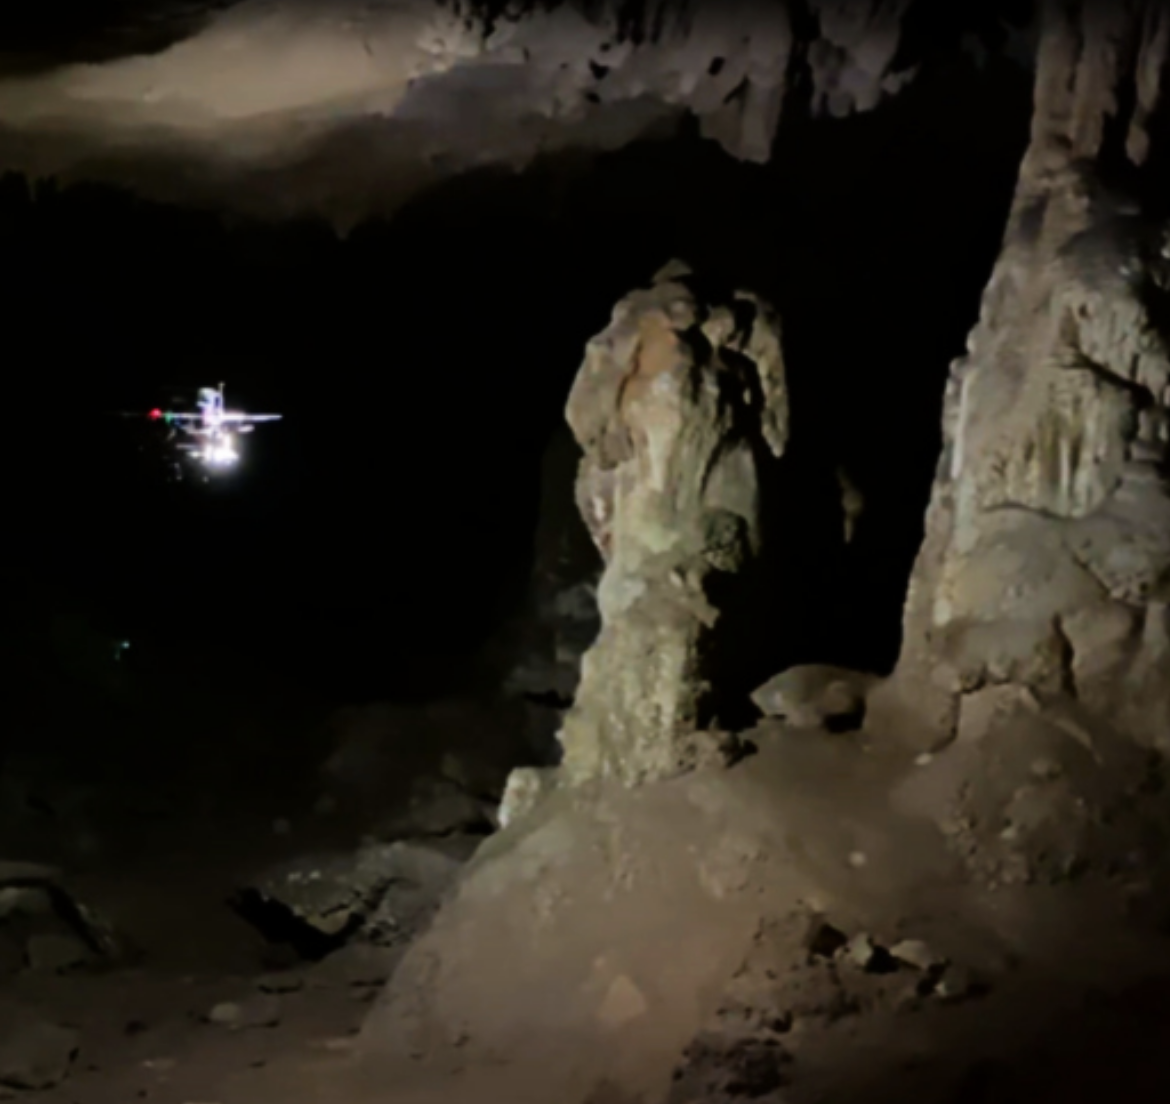 Autonomous Cave Surveying with an Aerial Robot